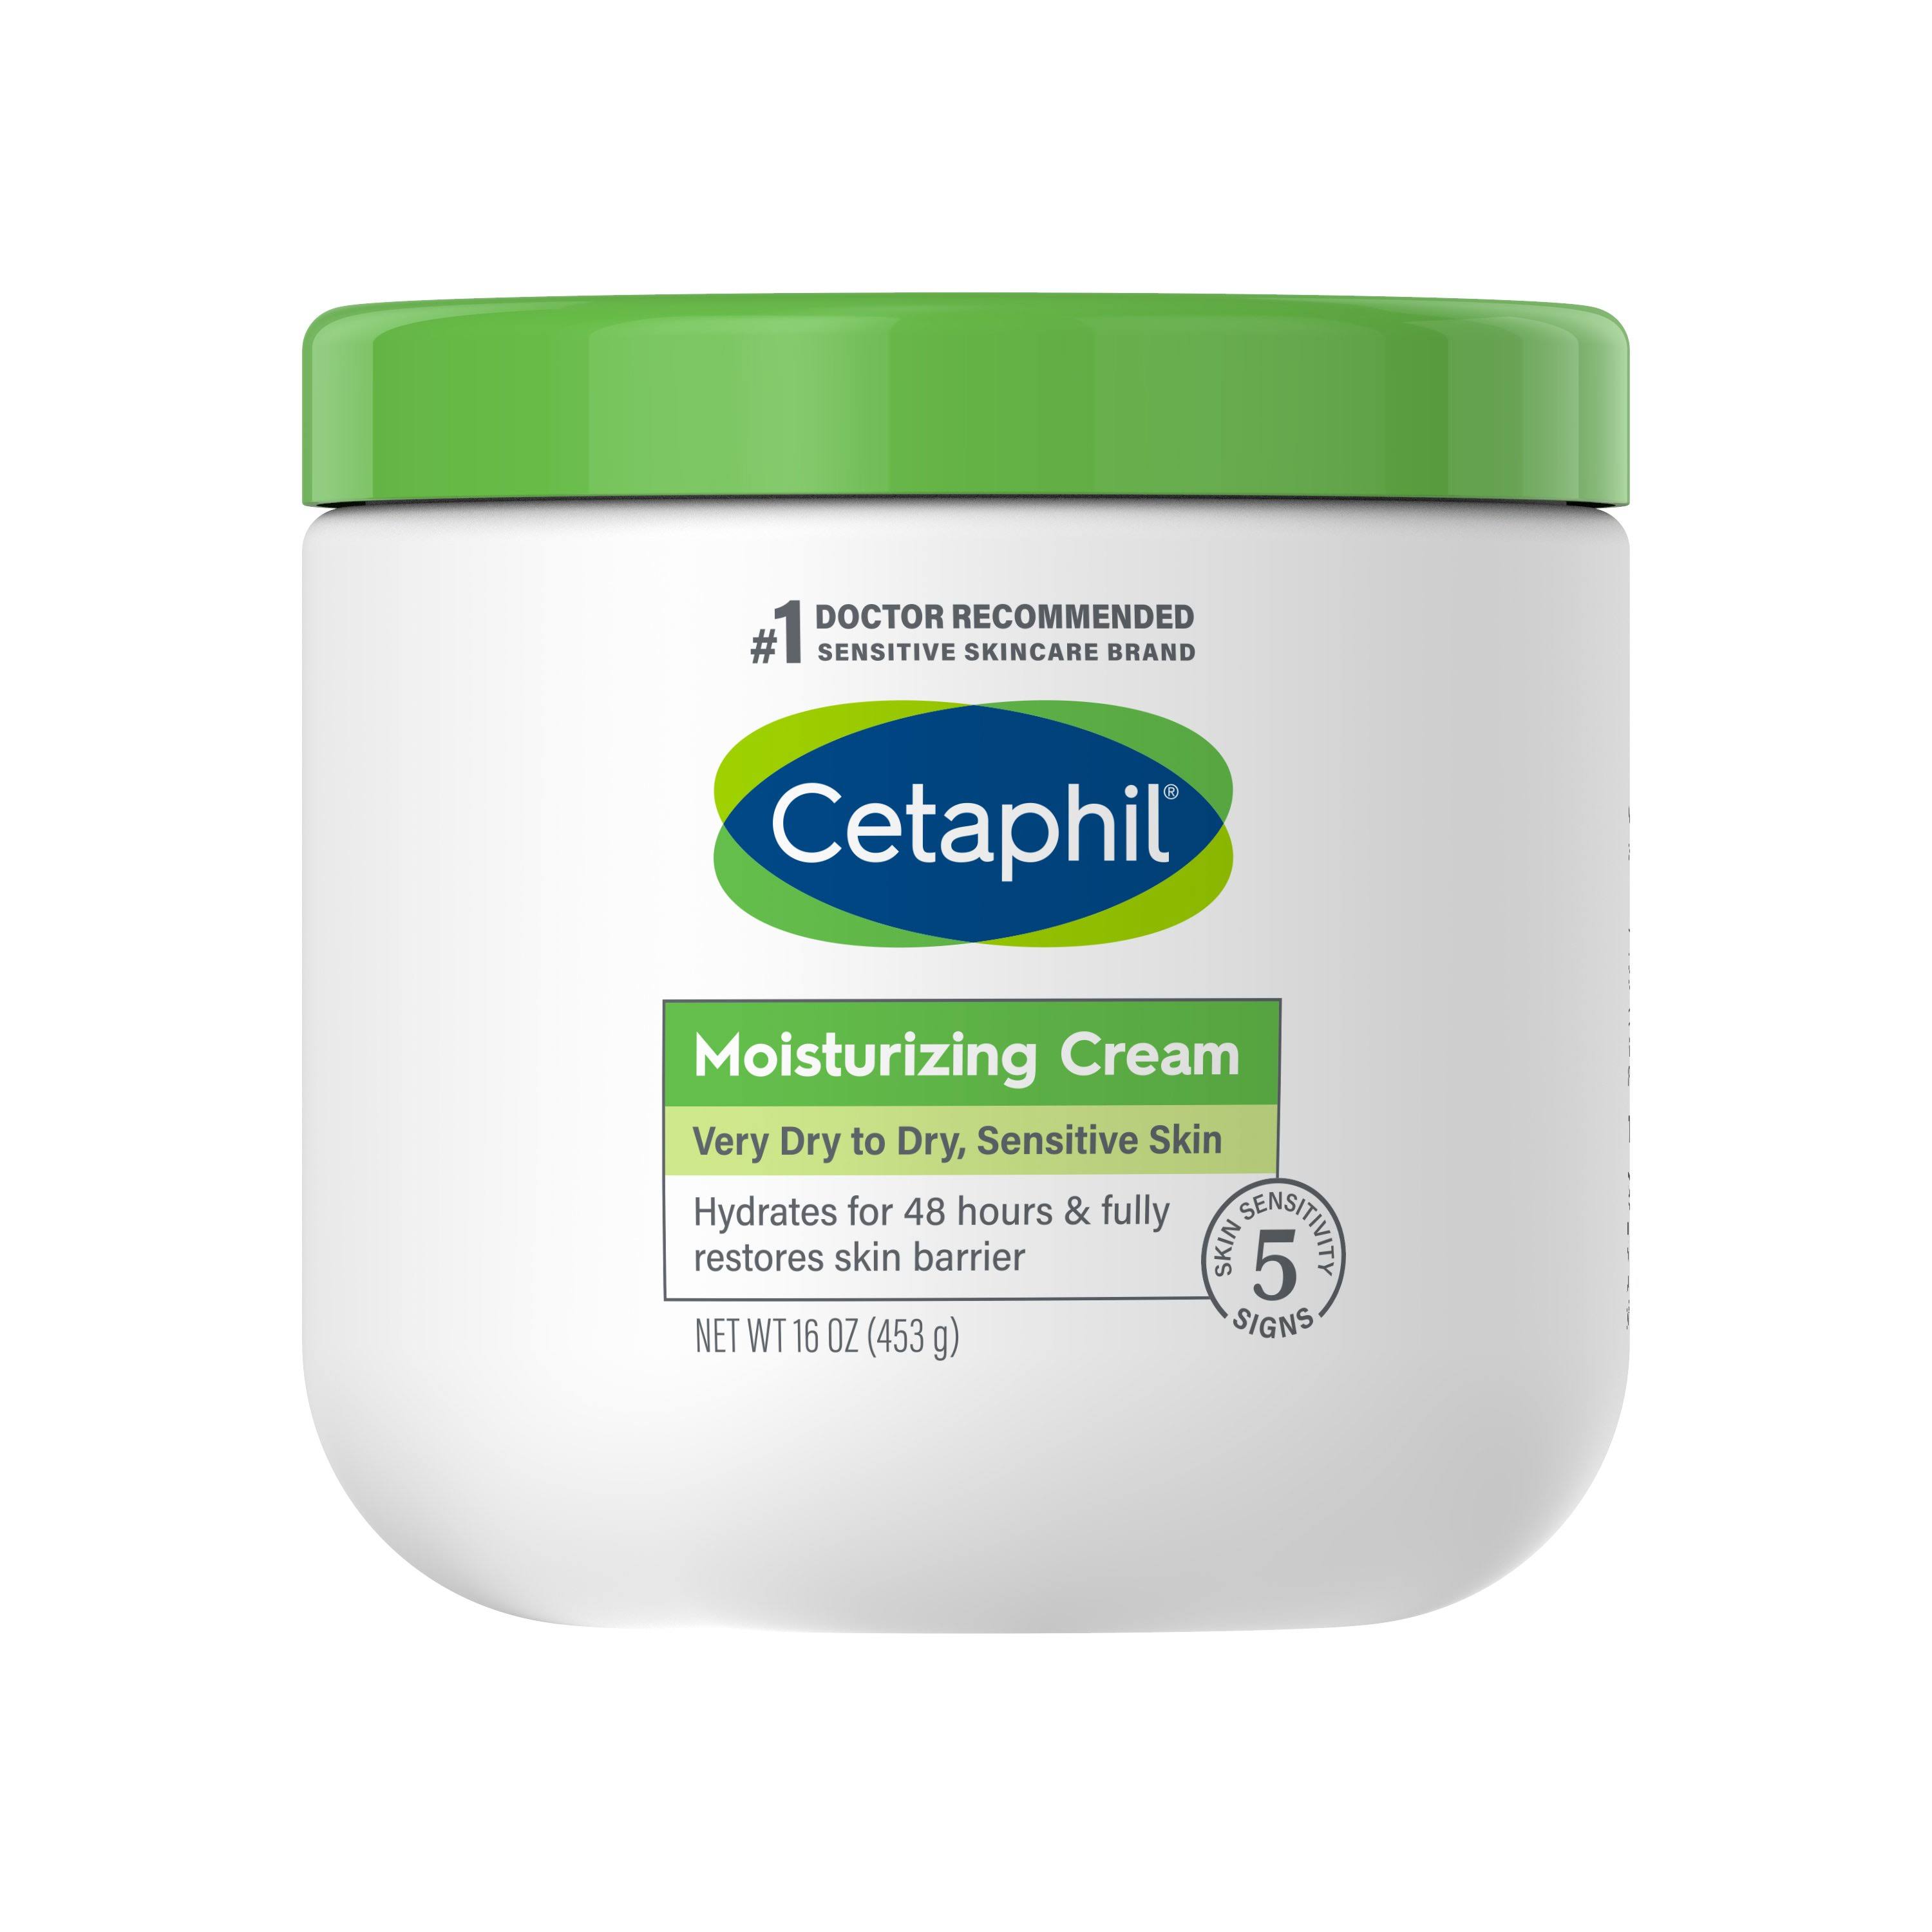 Cetaphil moisturizing cream dry to dry, sensitive skin, 16 oz